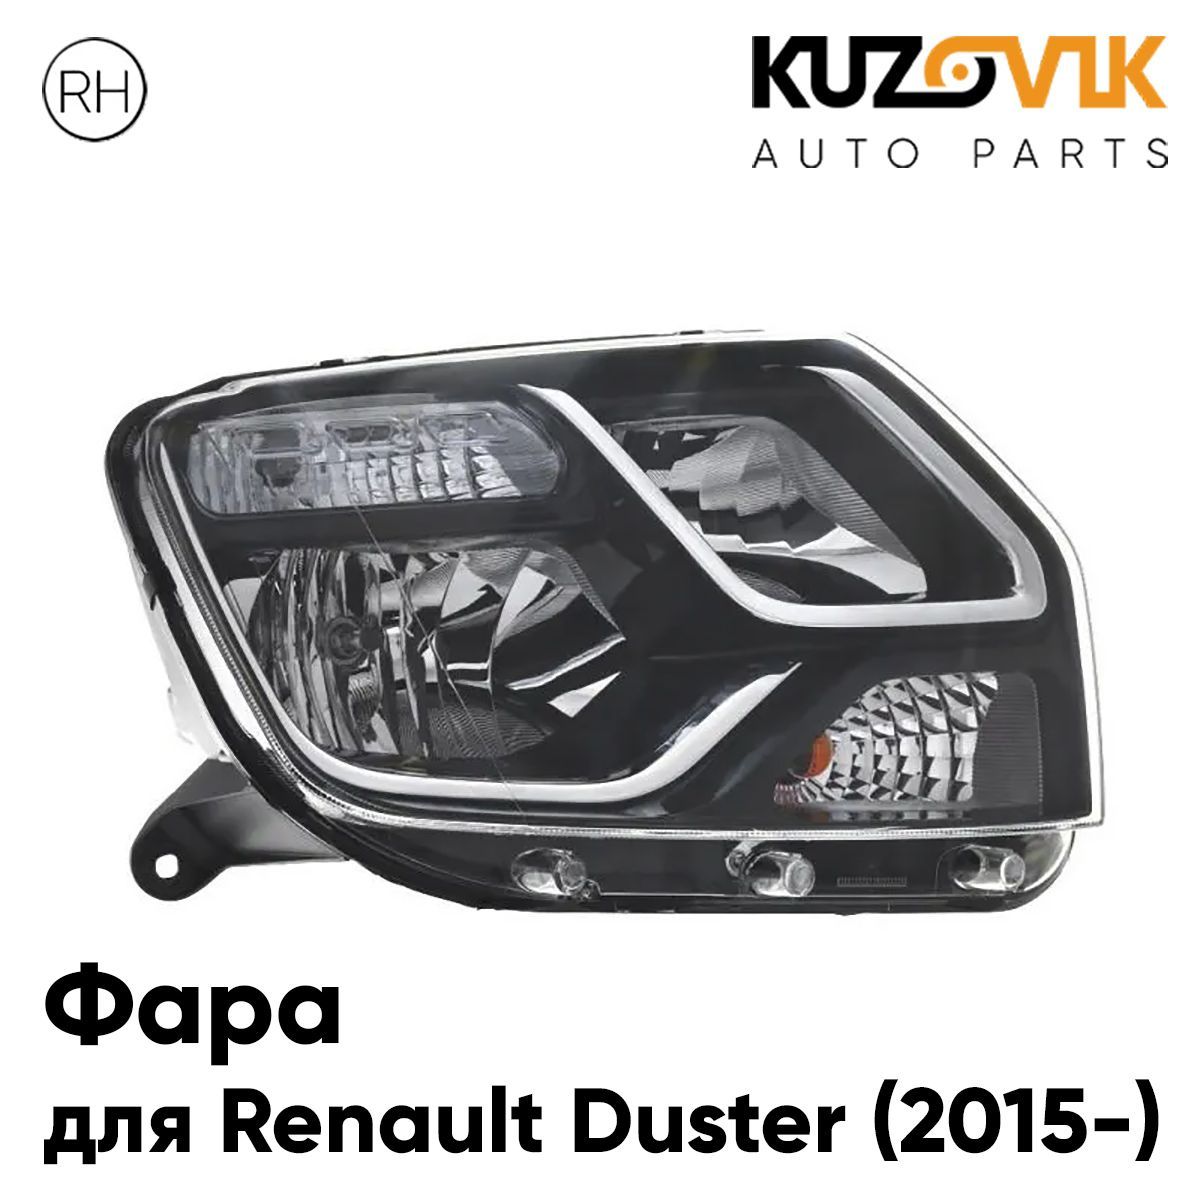 Фара Kuzovik правая +/- Renault Duster Рено Дастер (2015-) под корректор рестайлинг